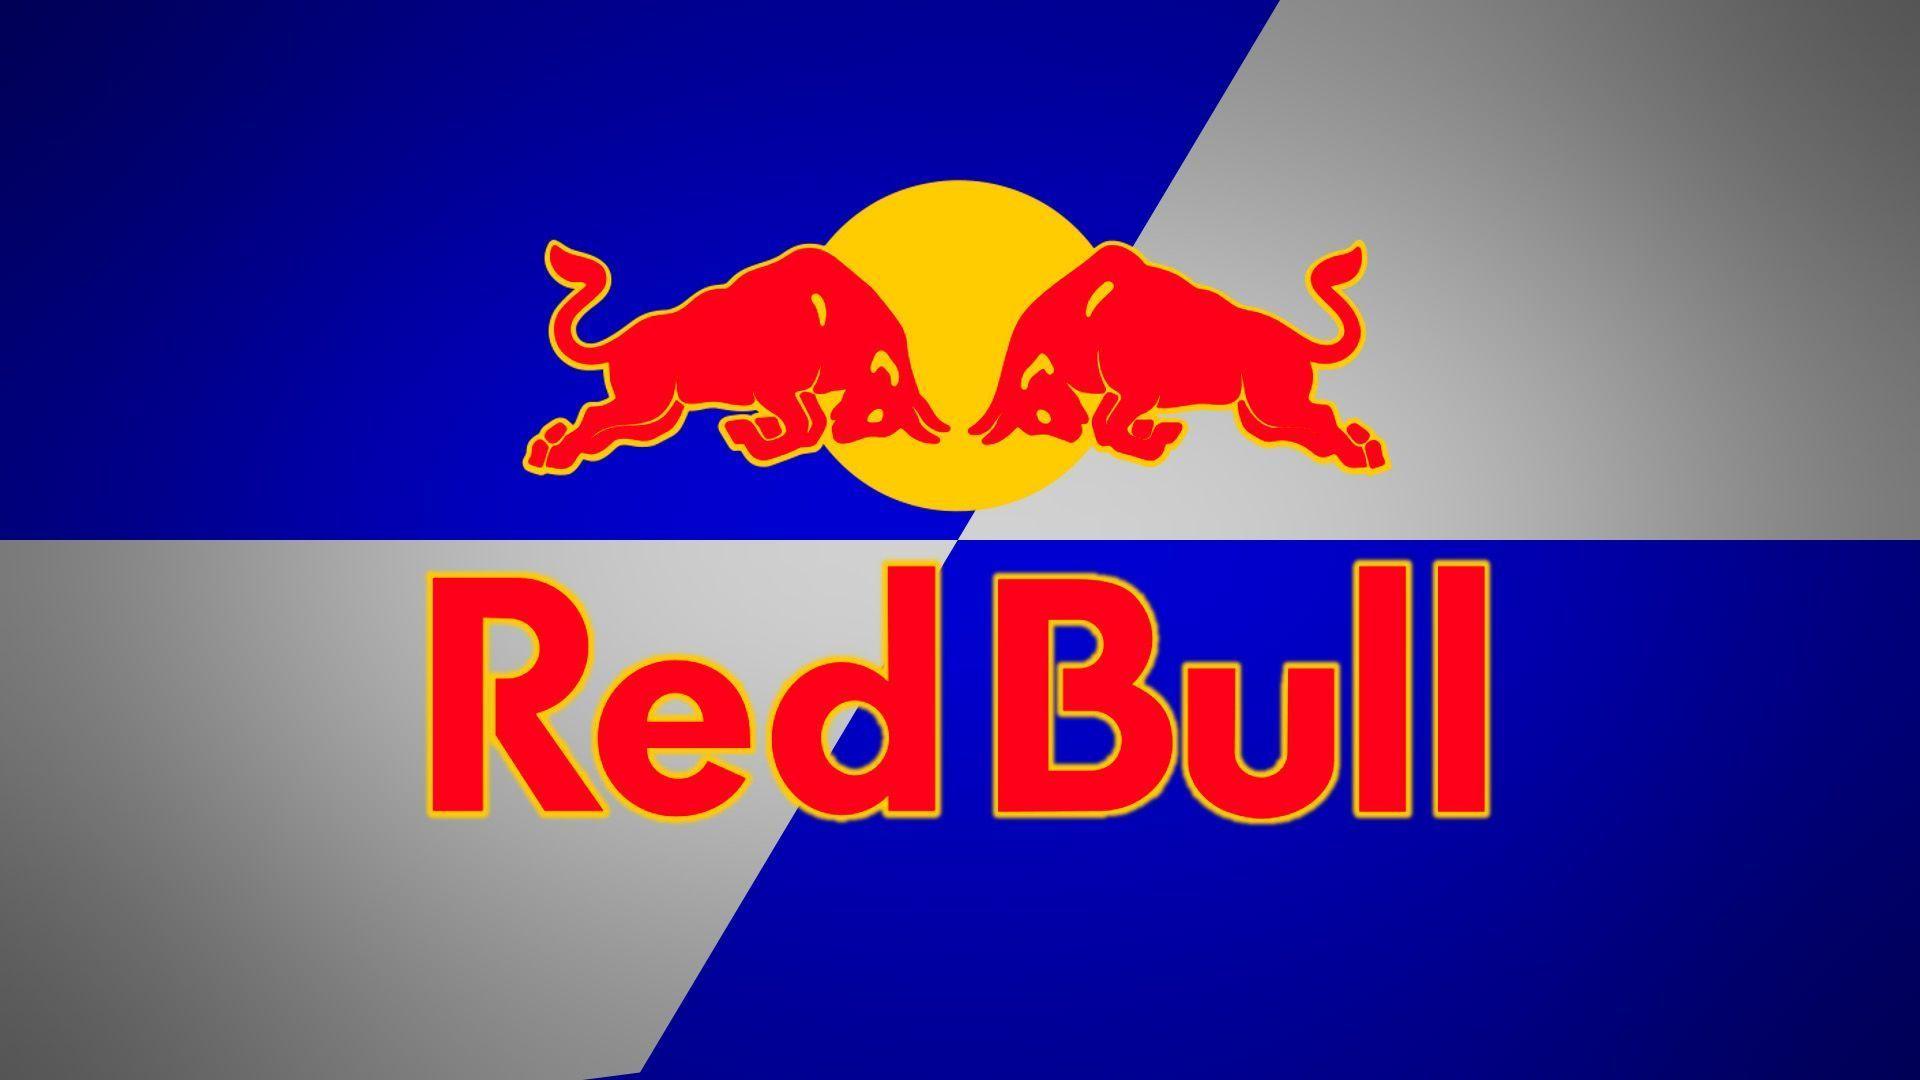 Red Bull Logo Pics